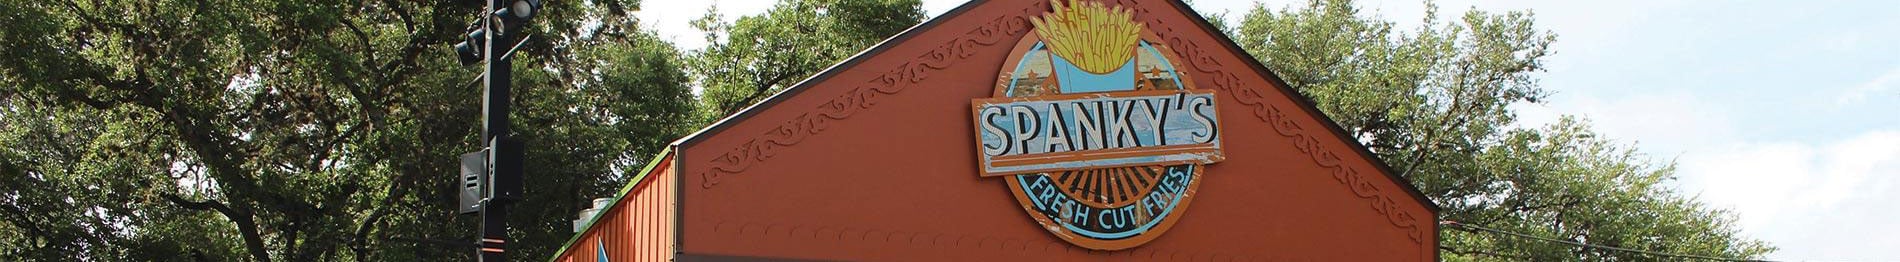 SeaWorld San Antonio restaurants Spanky's Fries